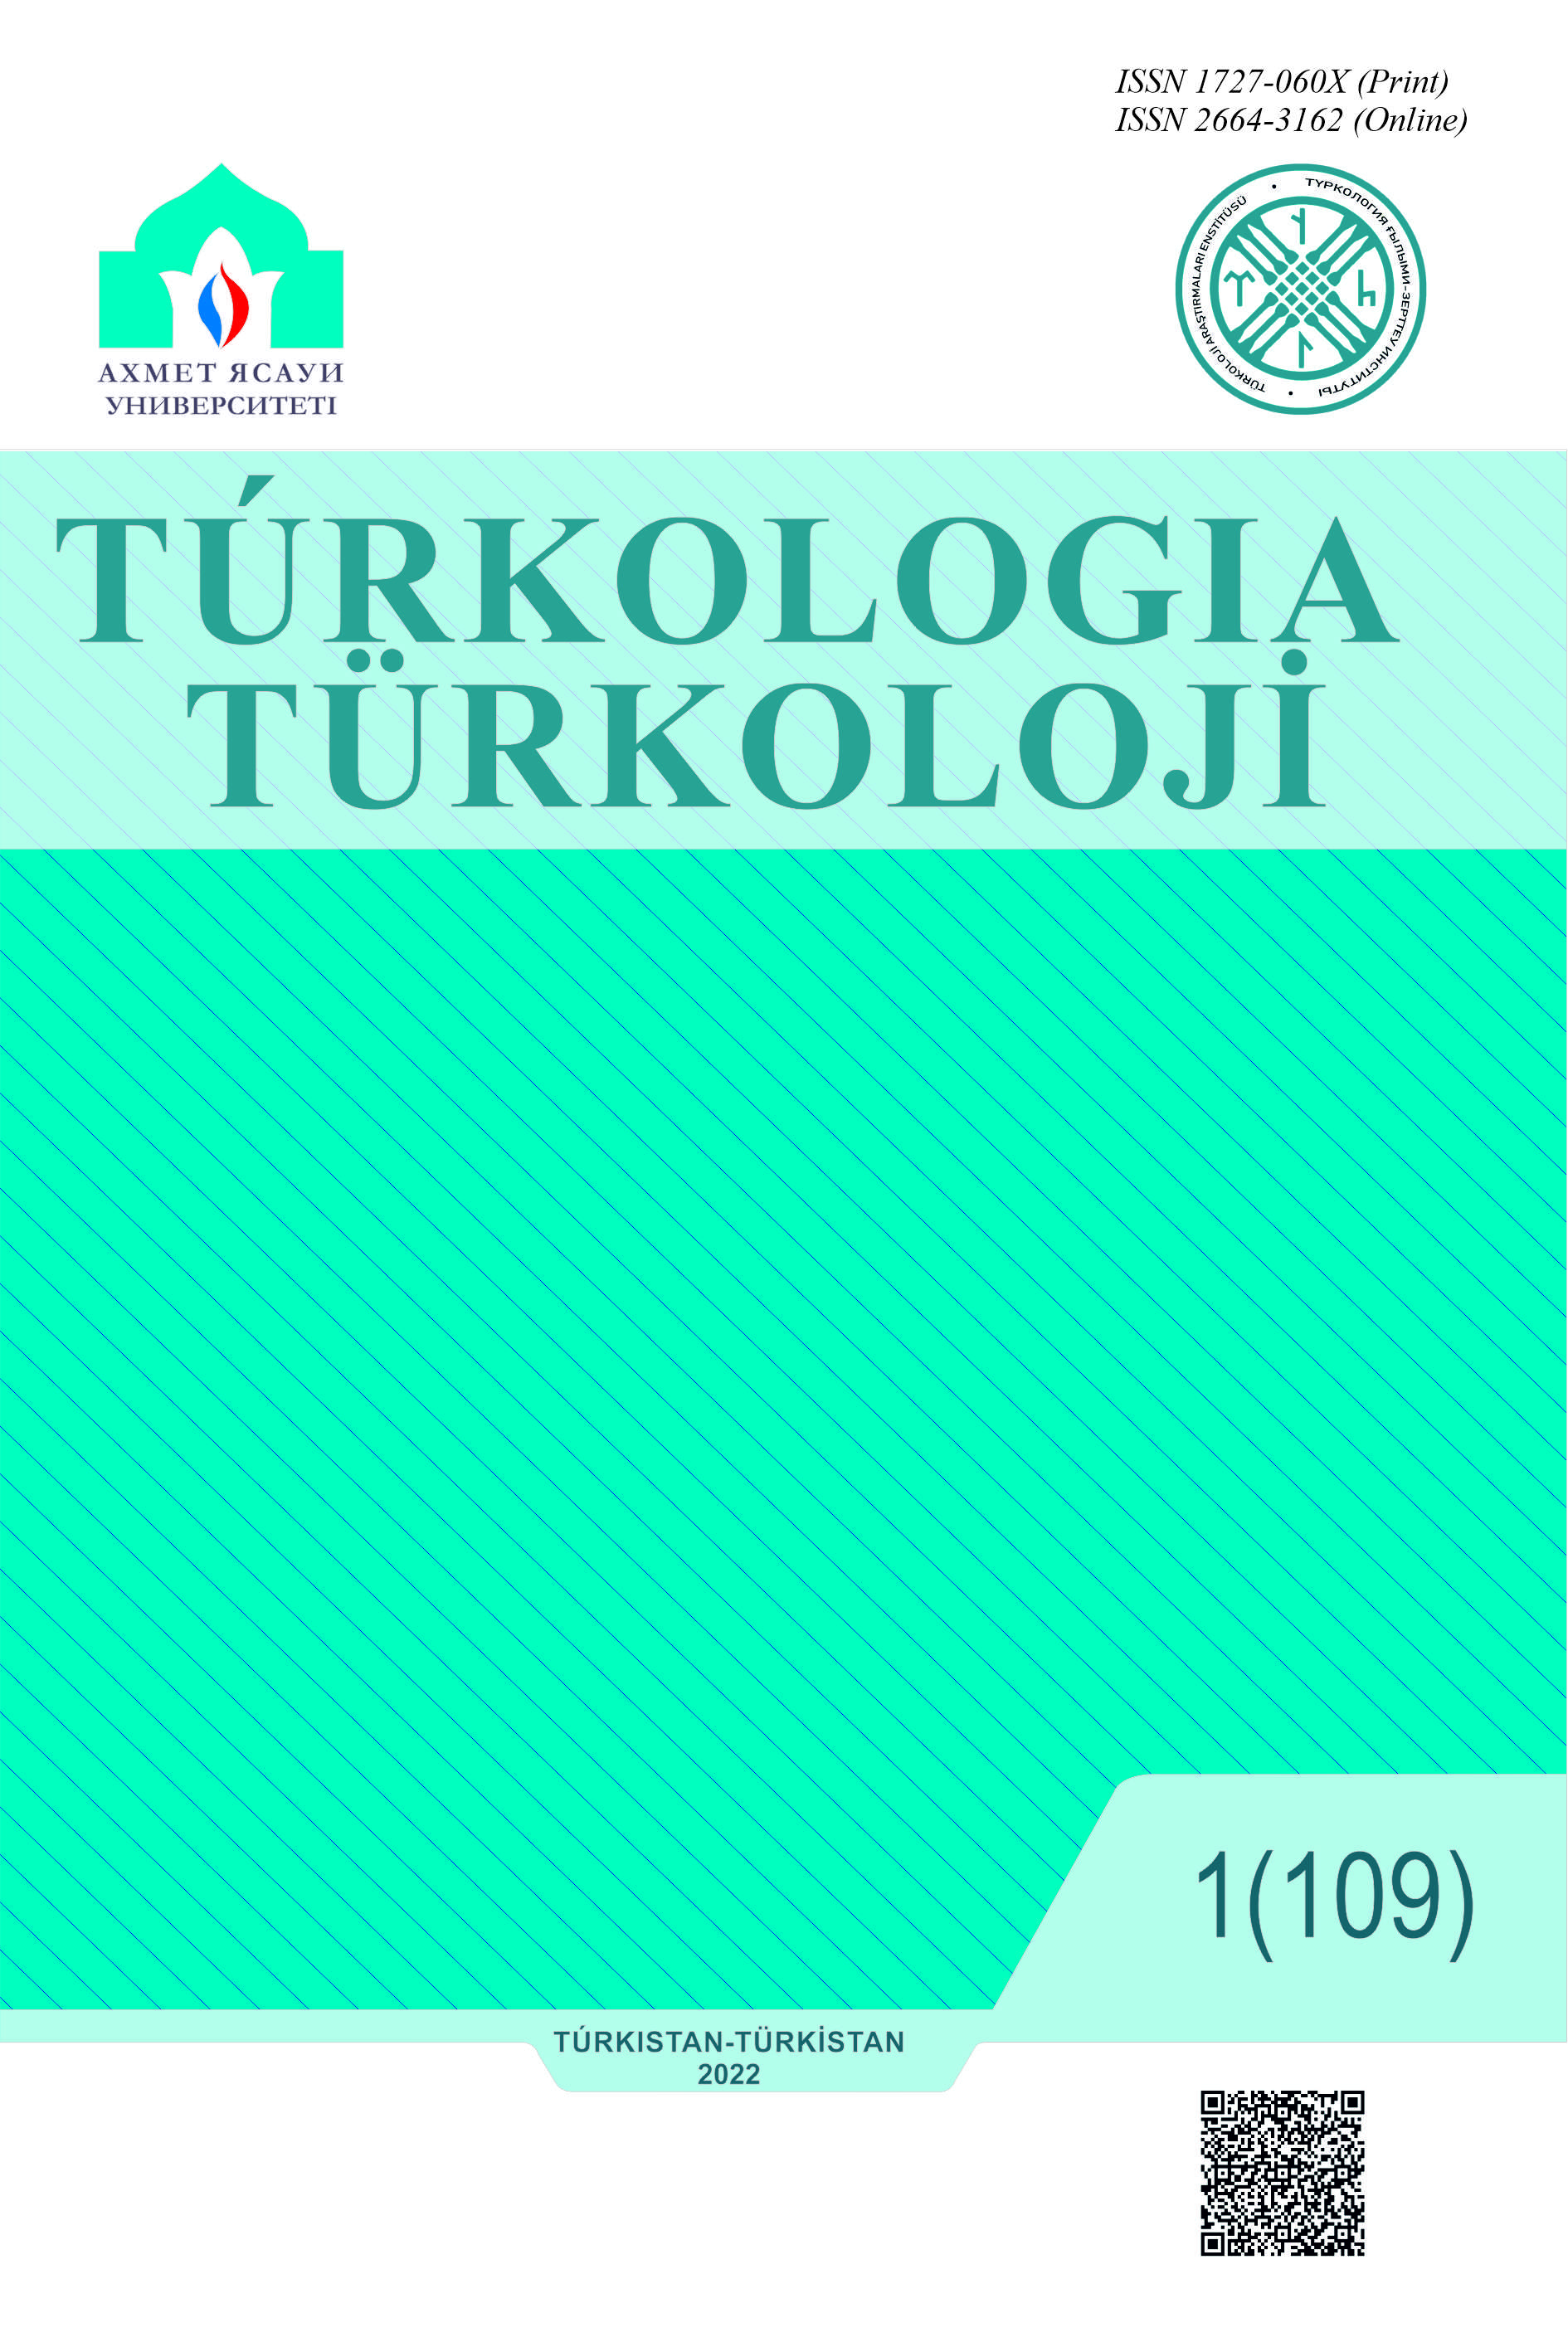 					Көрсету  Нөмір 109 № 1 (2022): Túrkologia (Түркология)
				